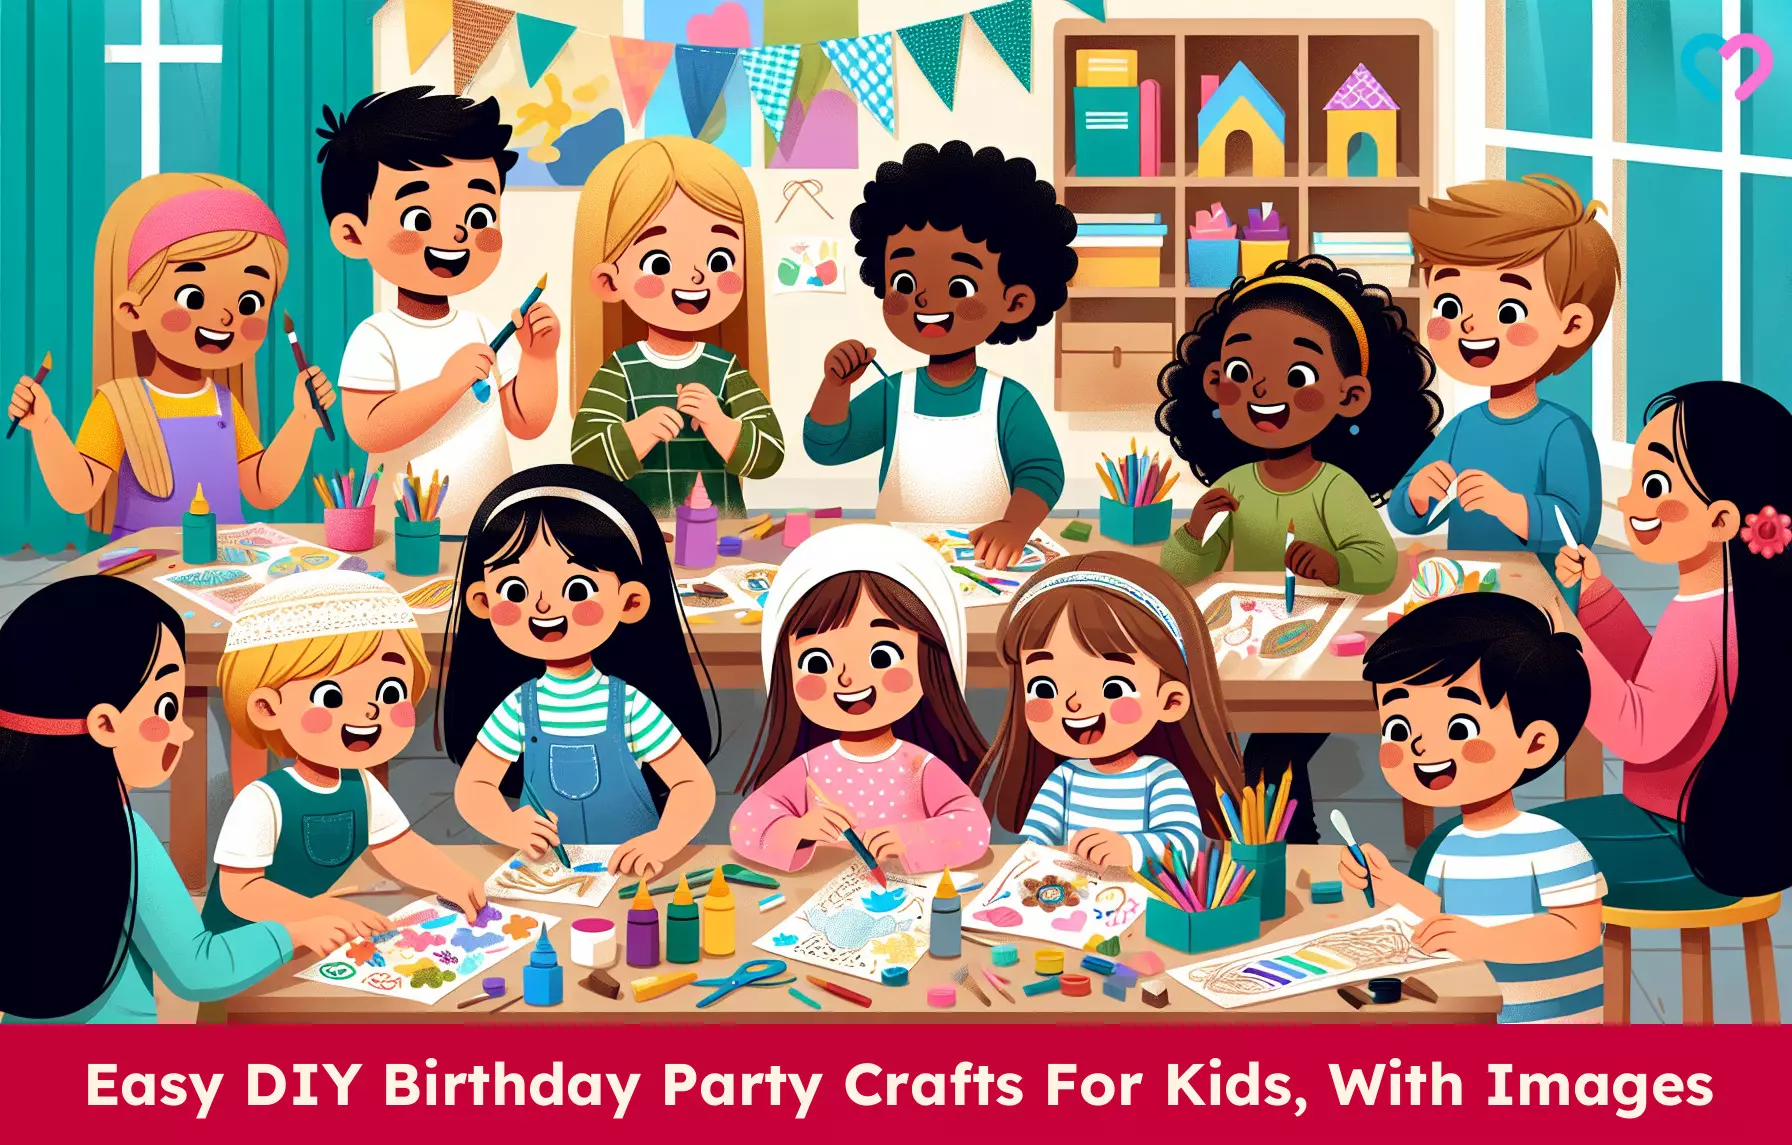 Party Crafts For Kids_illustration